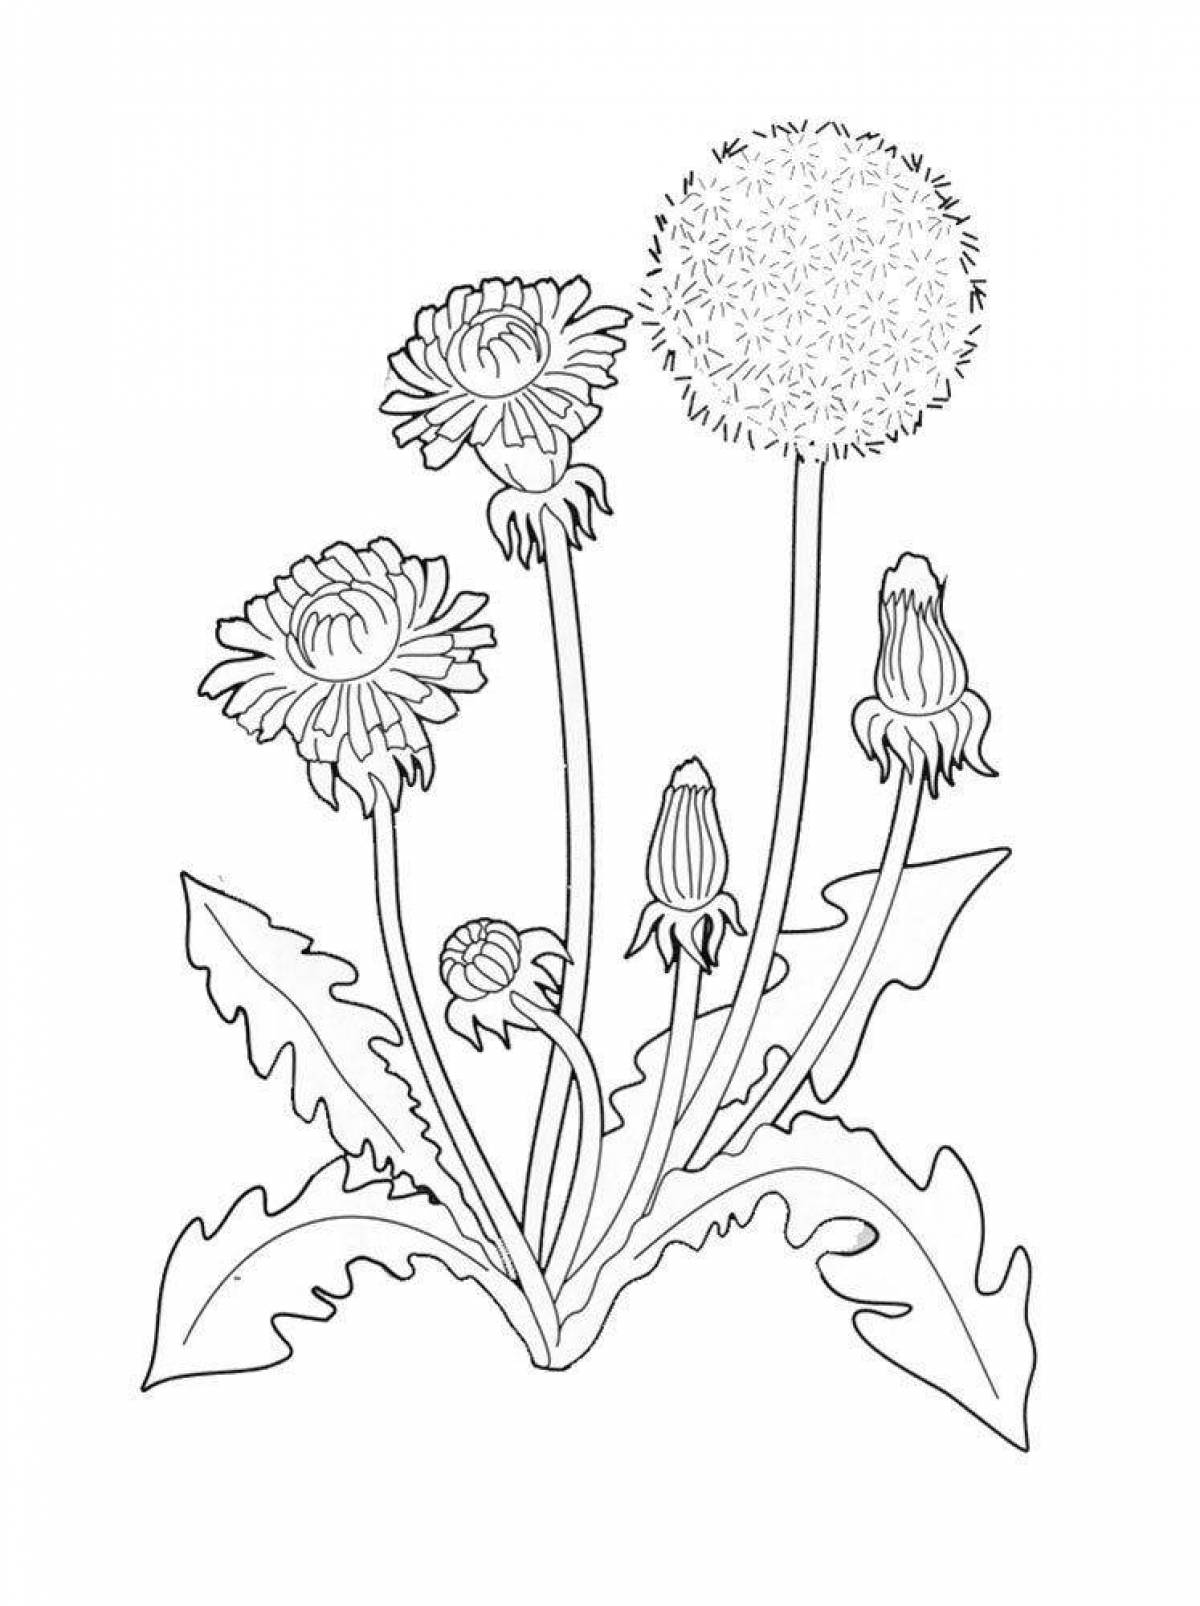 Fun dandelion coloring book for kids